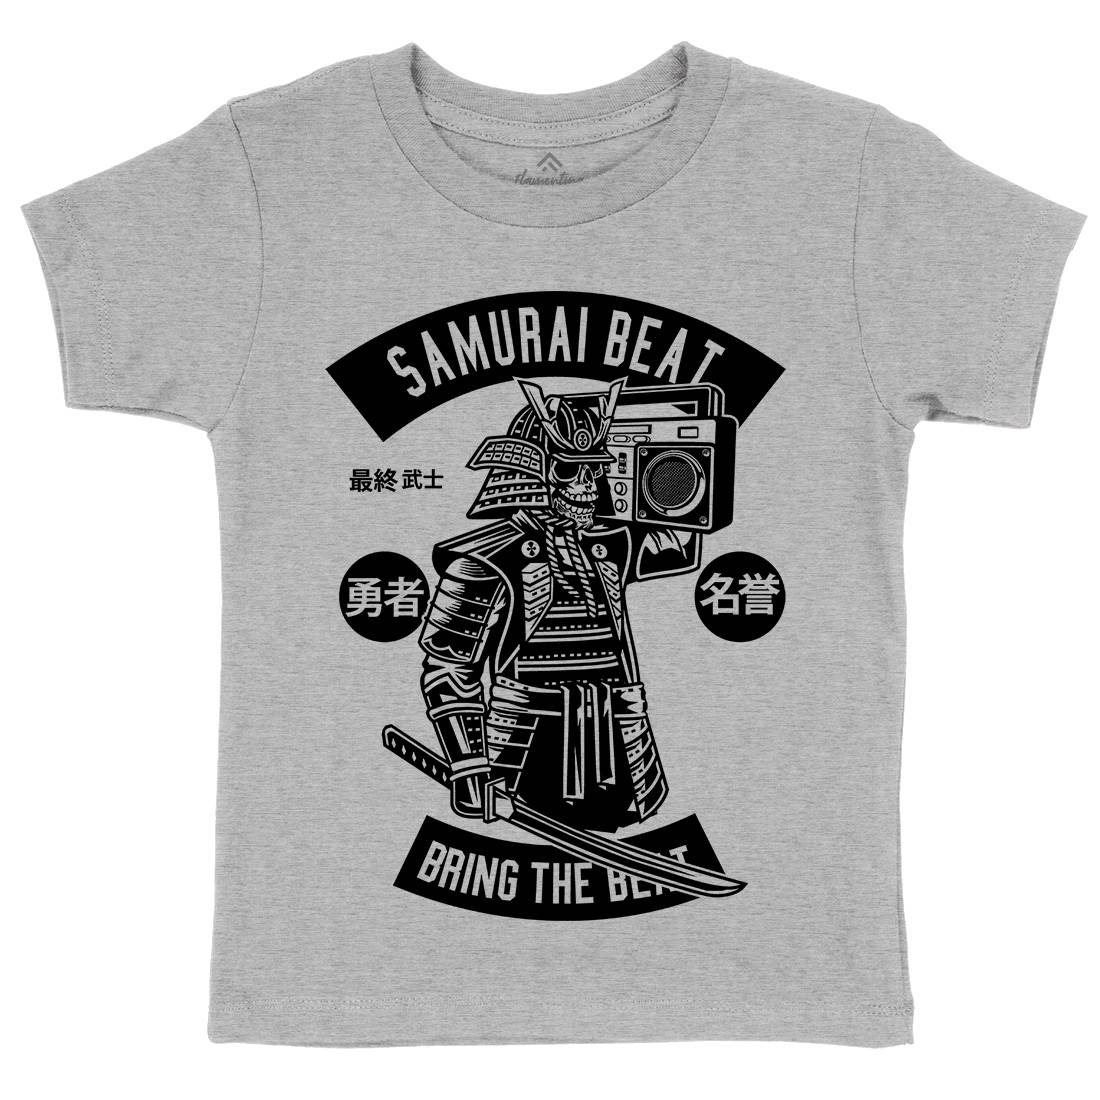 Samurai Beat Kids Crew Neck T-Shirt Asian B615